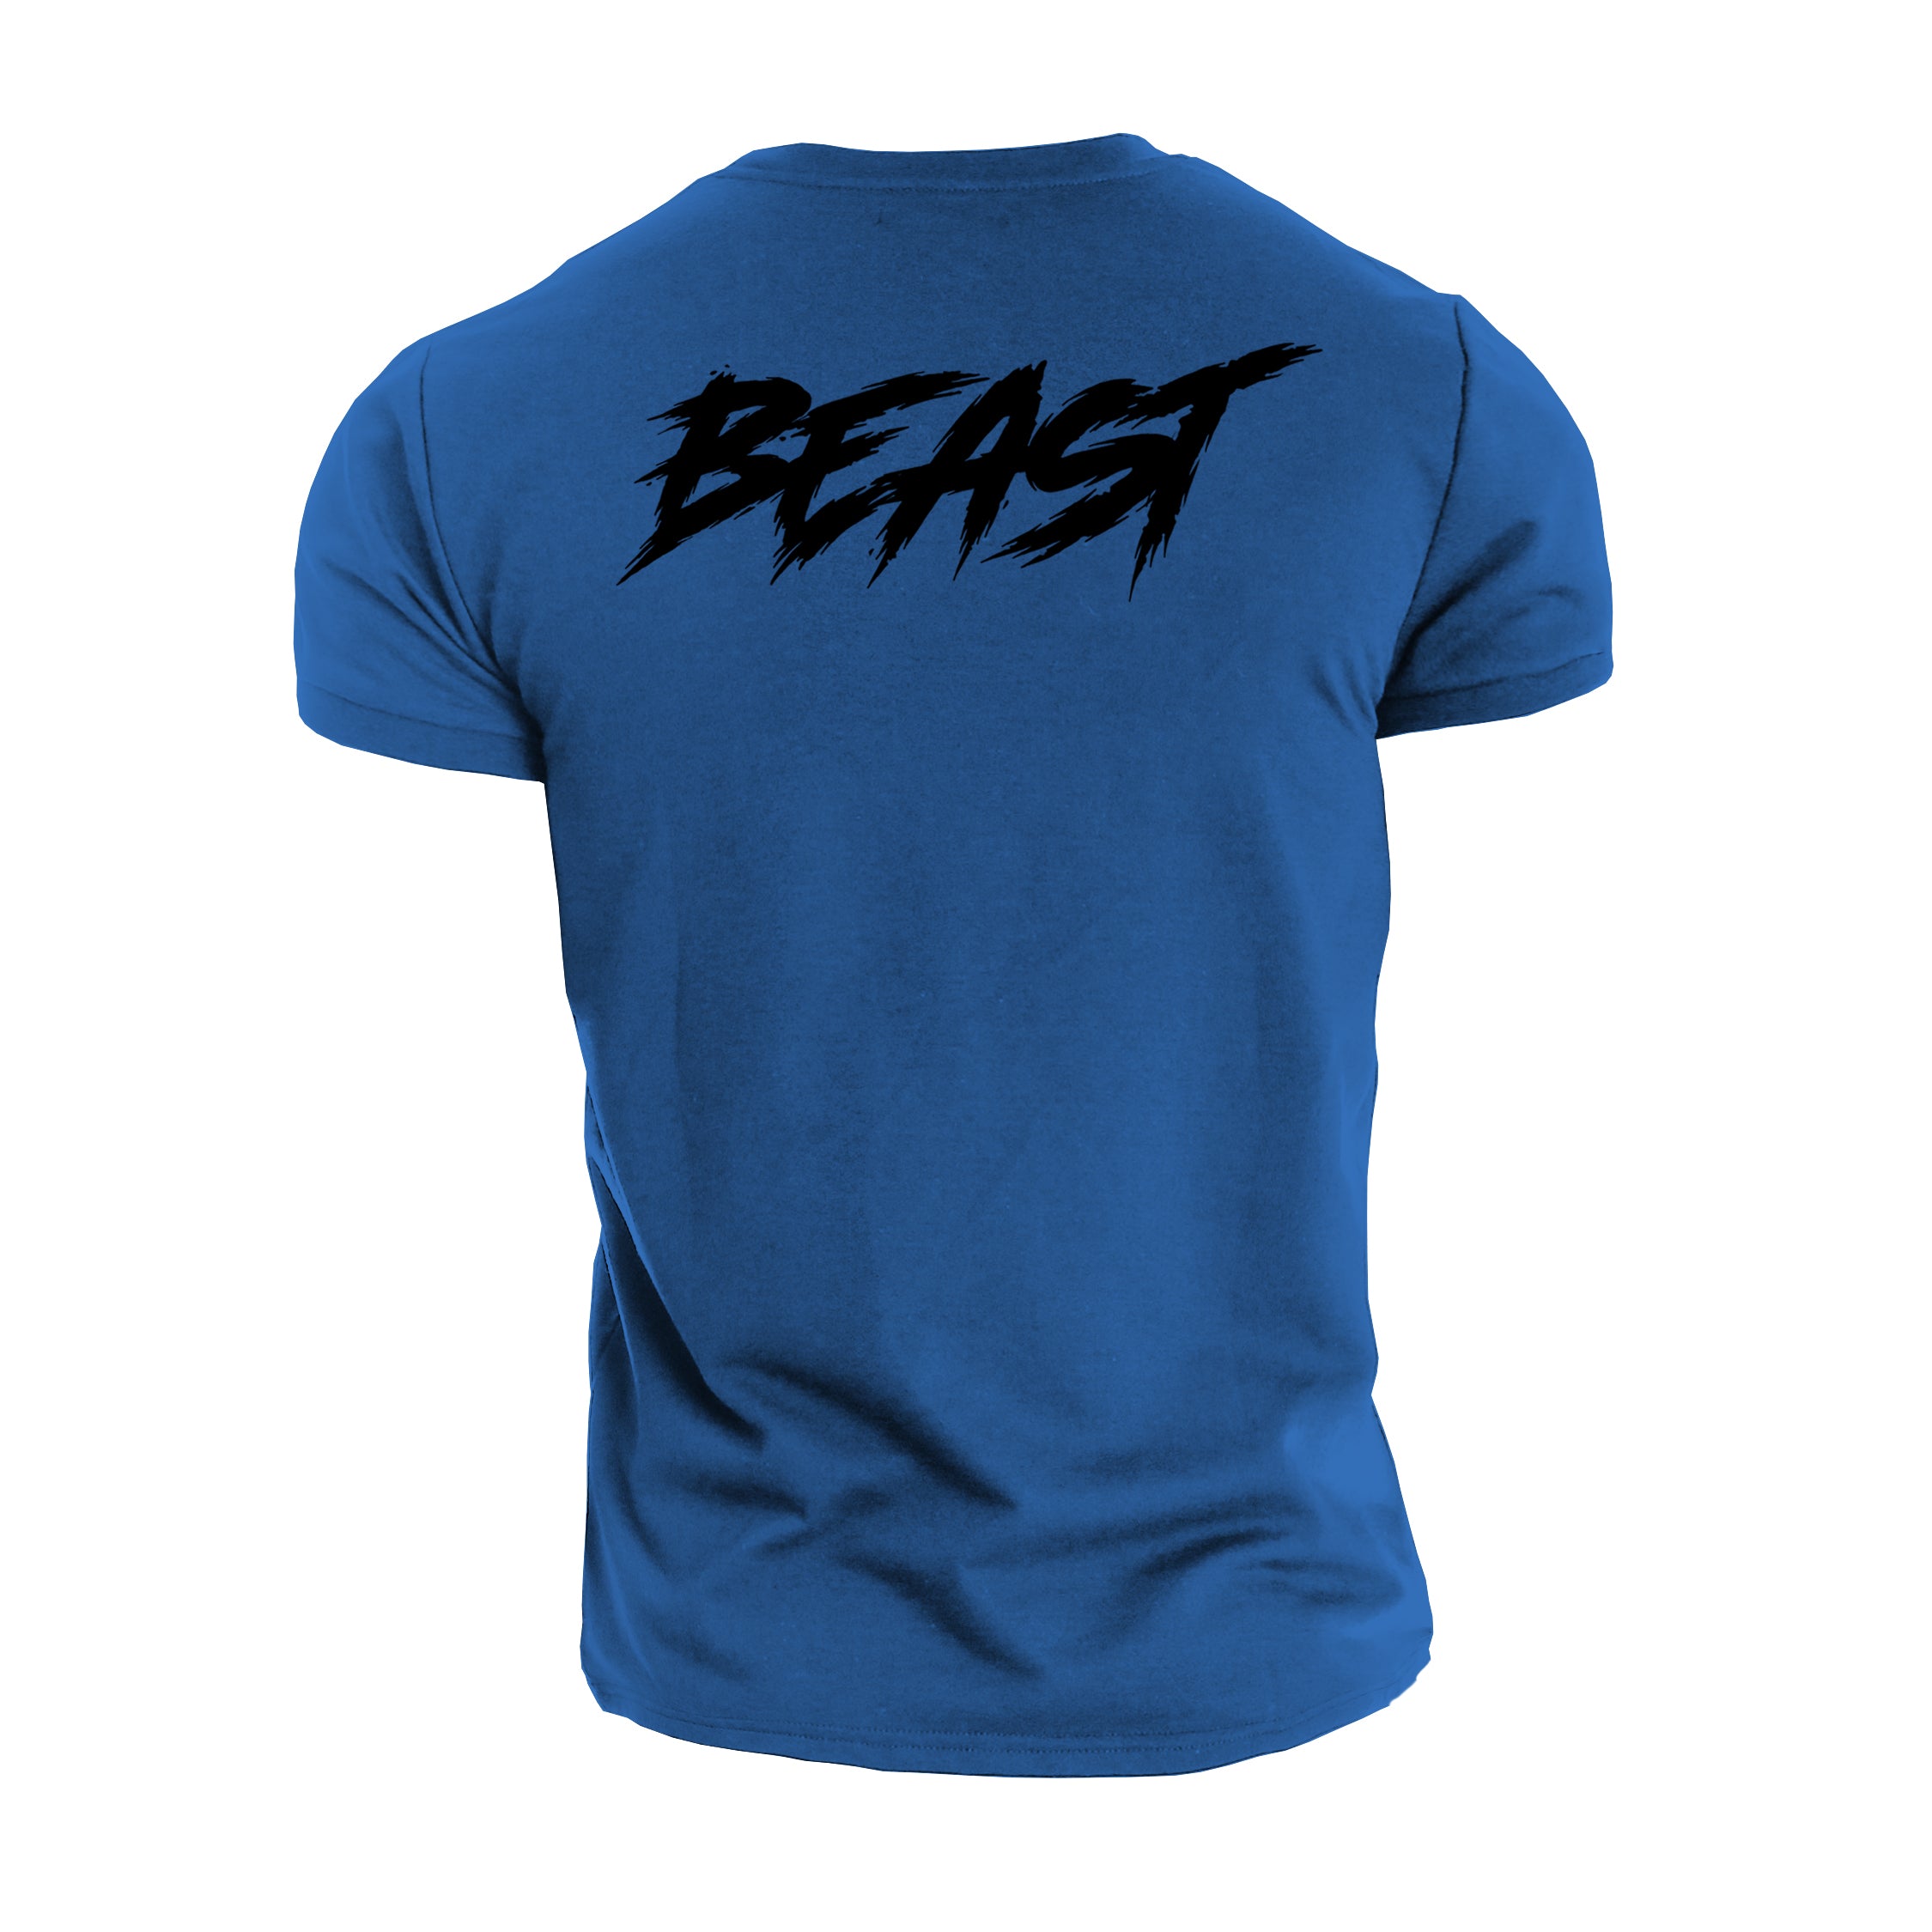 Beastly BEAST - Gym T-Shirt